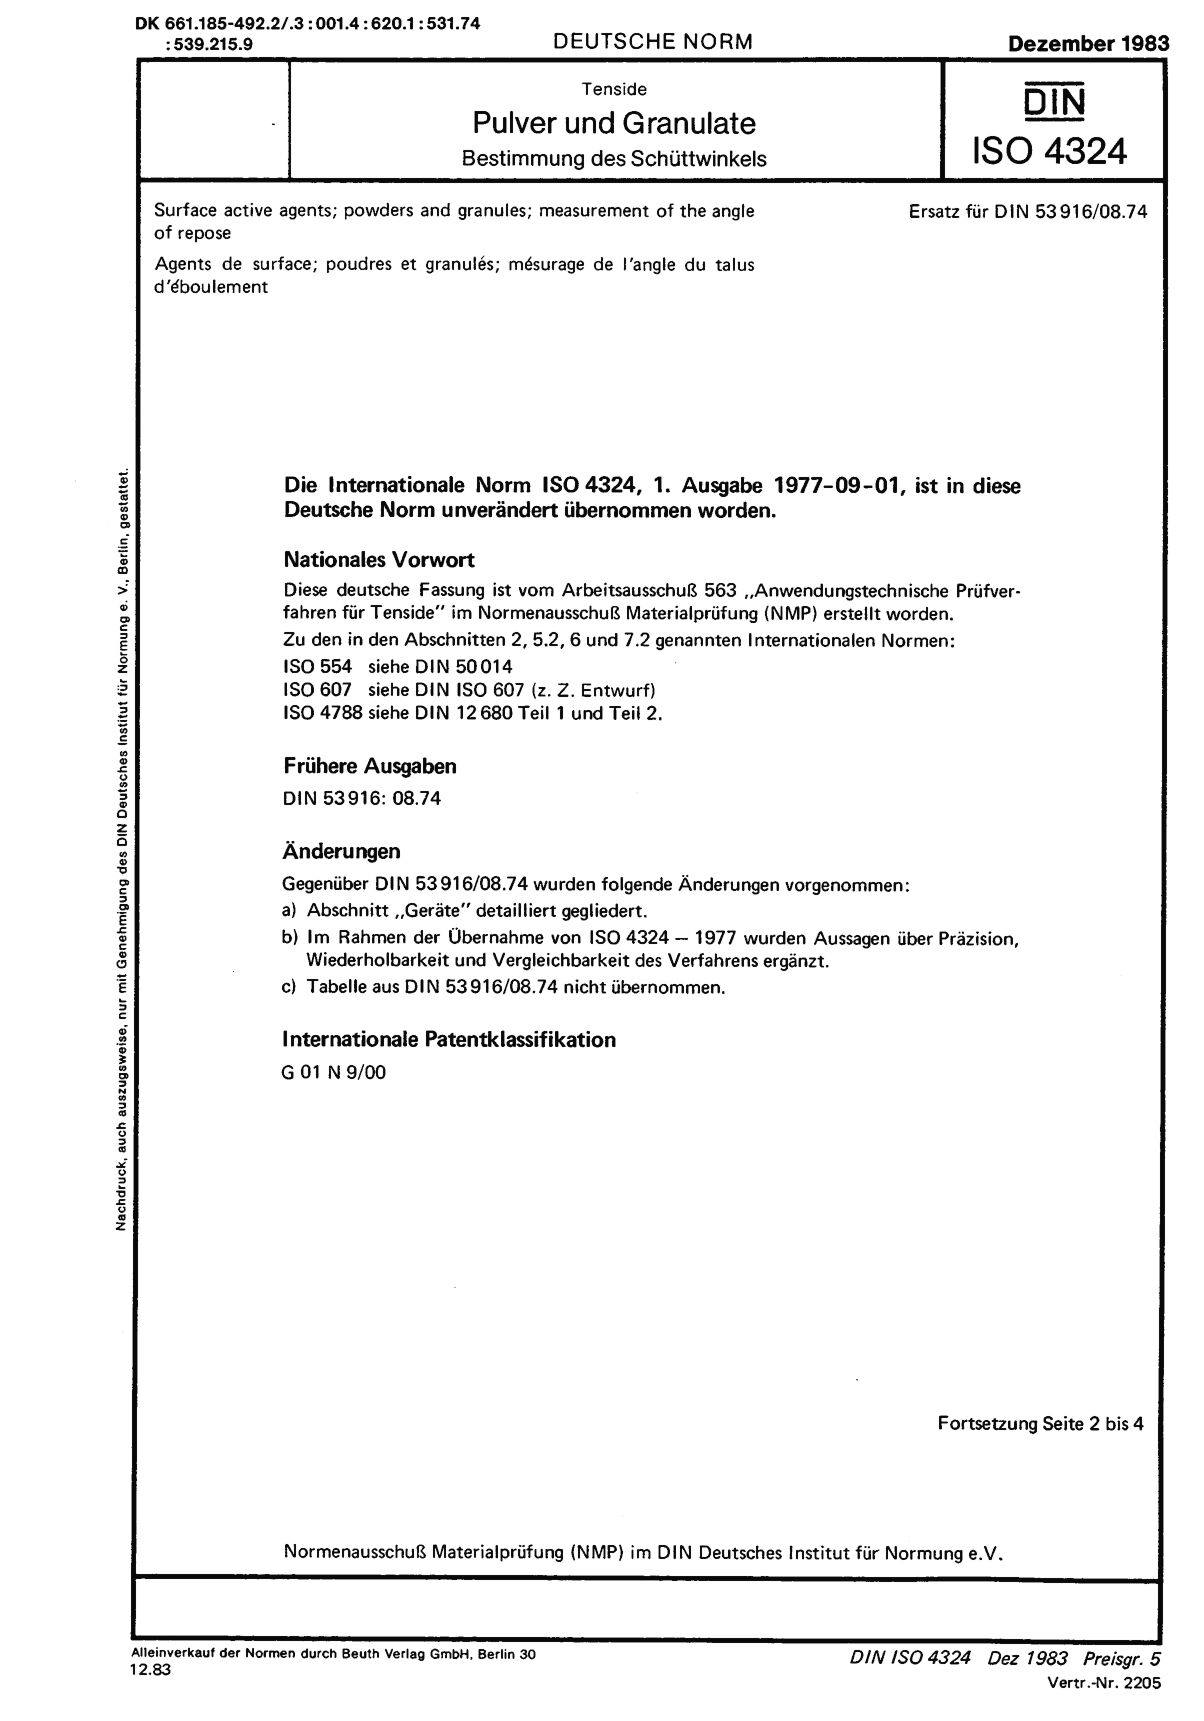 DIN ISO 4324:1983